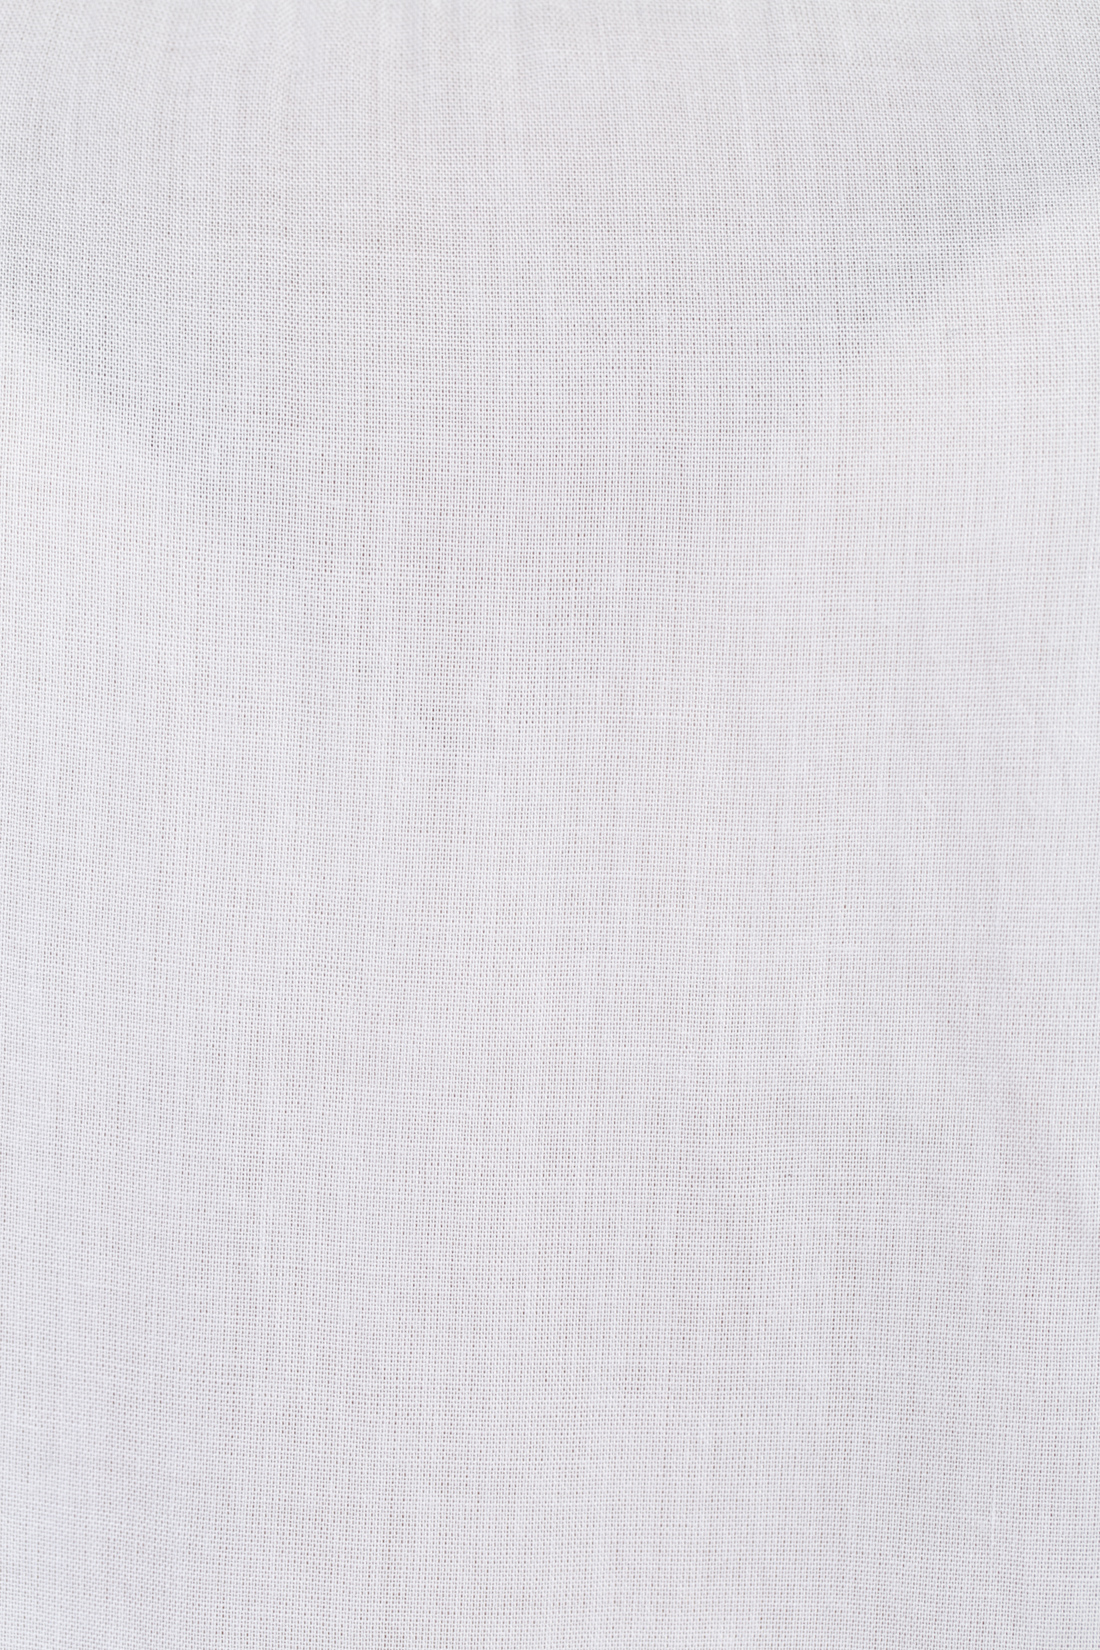 Топ с кружевной спинкой (арт. baon B267031), размер XXL, цвет белый Топ с кружевной спинкой (арт. baon B267031) - фото 3